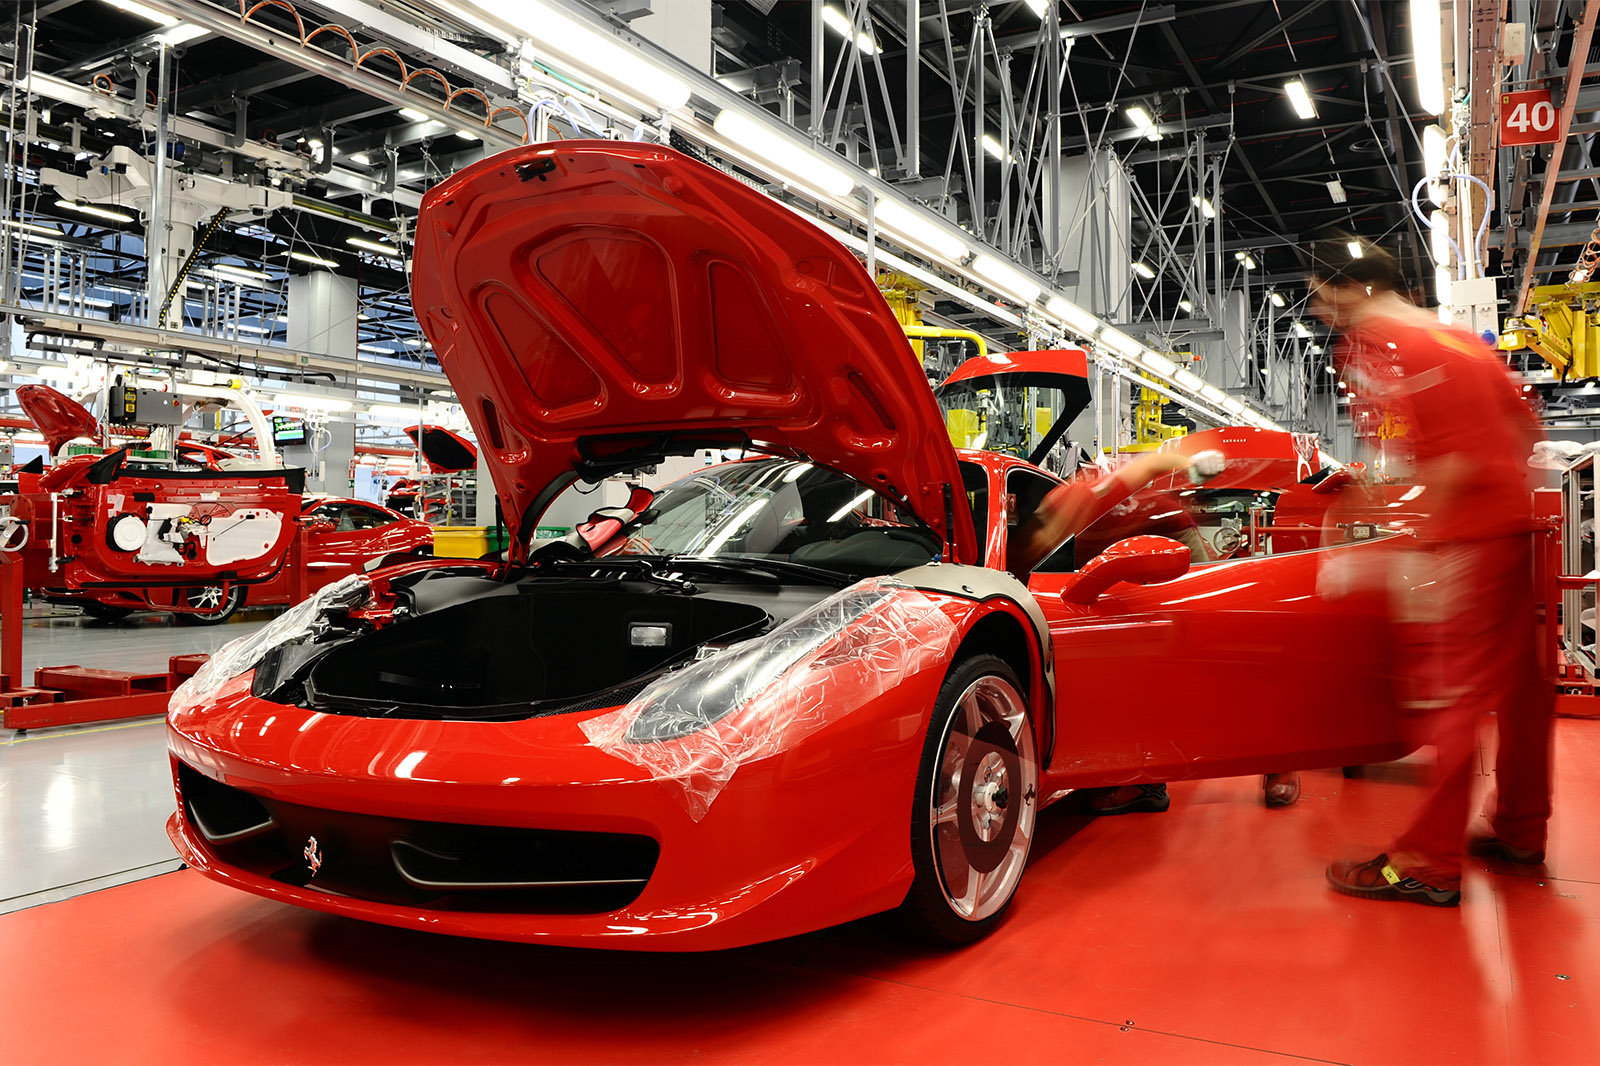 Производим тачки. Ferrari Maranello Factory. Завод Феррари в Италии. Завод Феррари в Маранелло. Завод Феррари 2020.